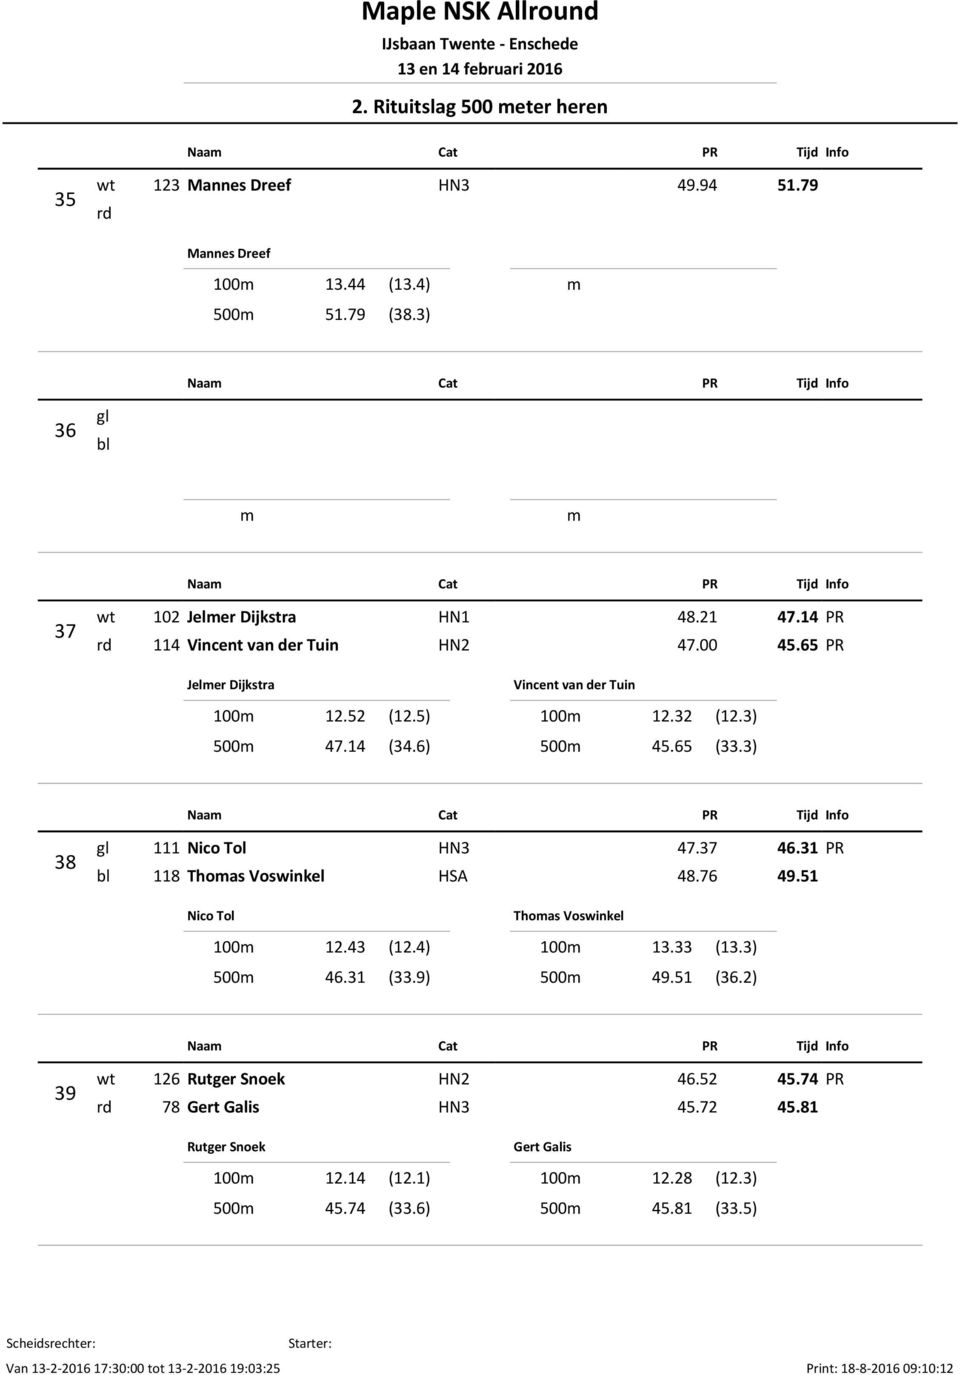 37 46.31 bl 118 Thomas Voswinkel HSA 48.76 49.51 Nico Tol 100m 12.43 (12.4) 500m 46.31 (33.9) Thomas Voswinkel 100m 13.33 (13.3) 500m 49.51 (36.2) 39 wt 126 Rutger Snoek HN2 46.52 45.